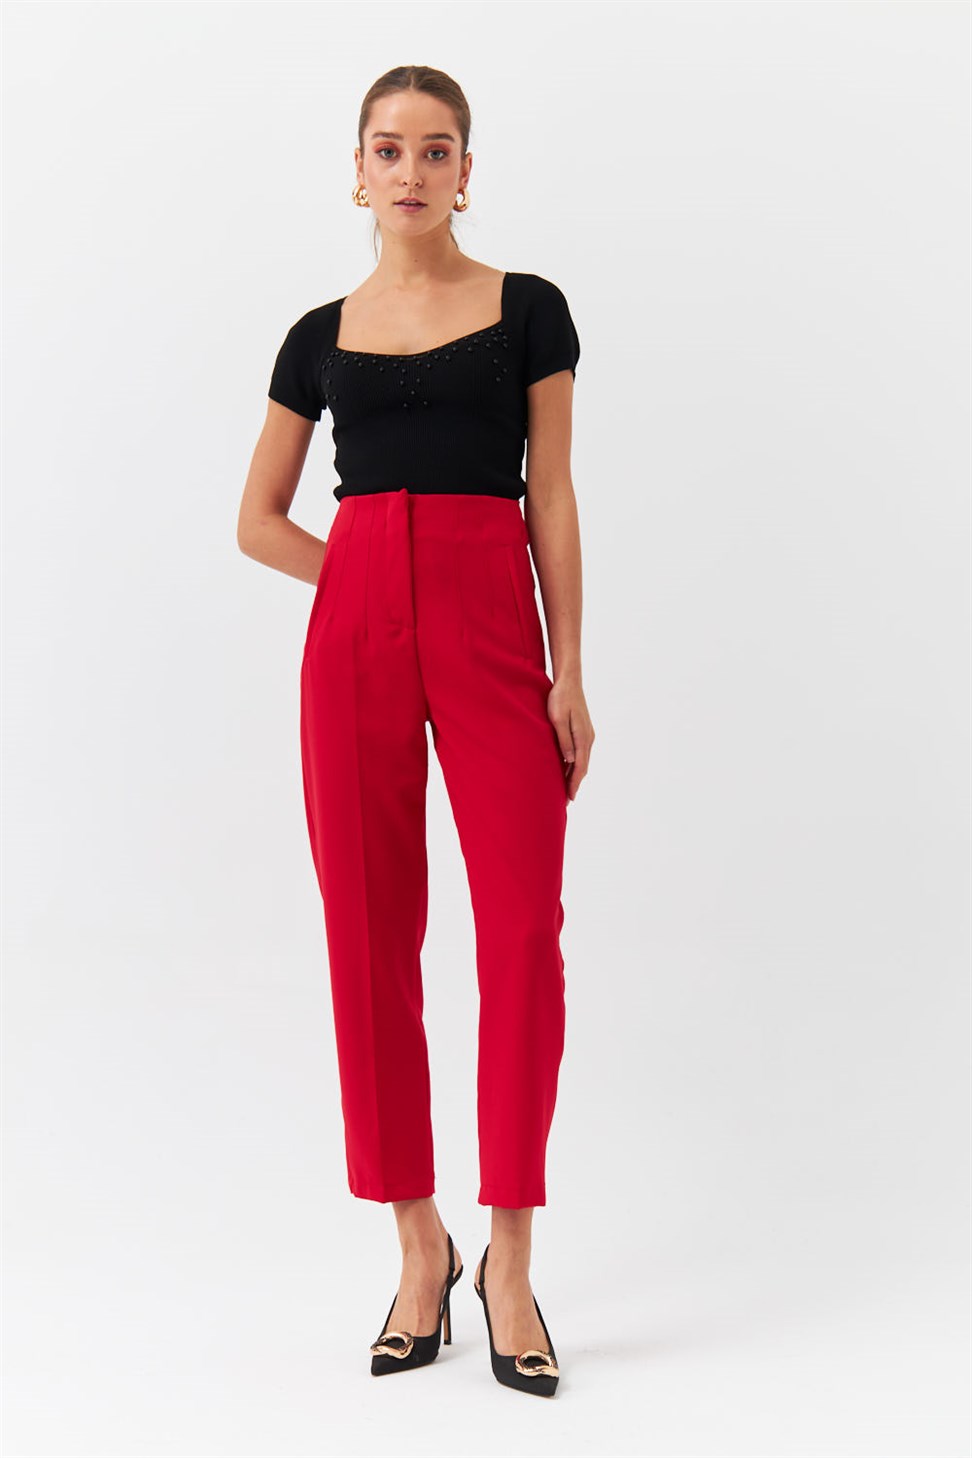 Modest High Waist Red Womens Fabric Trousers